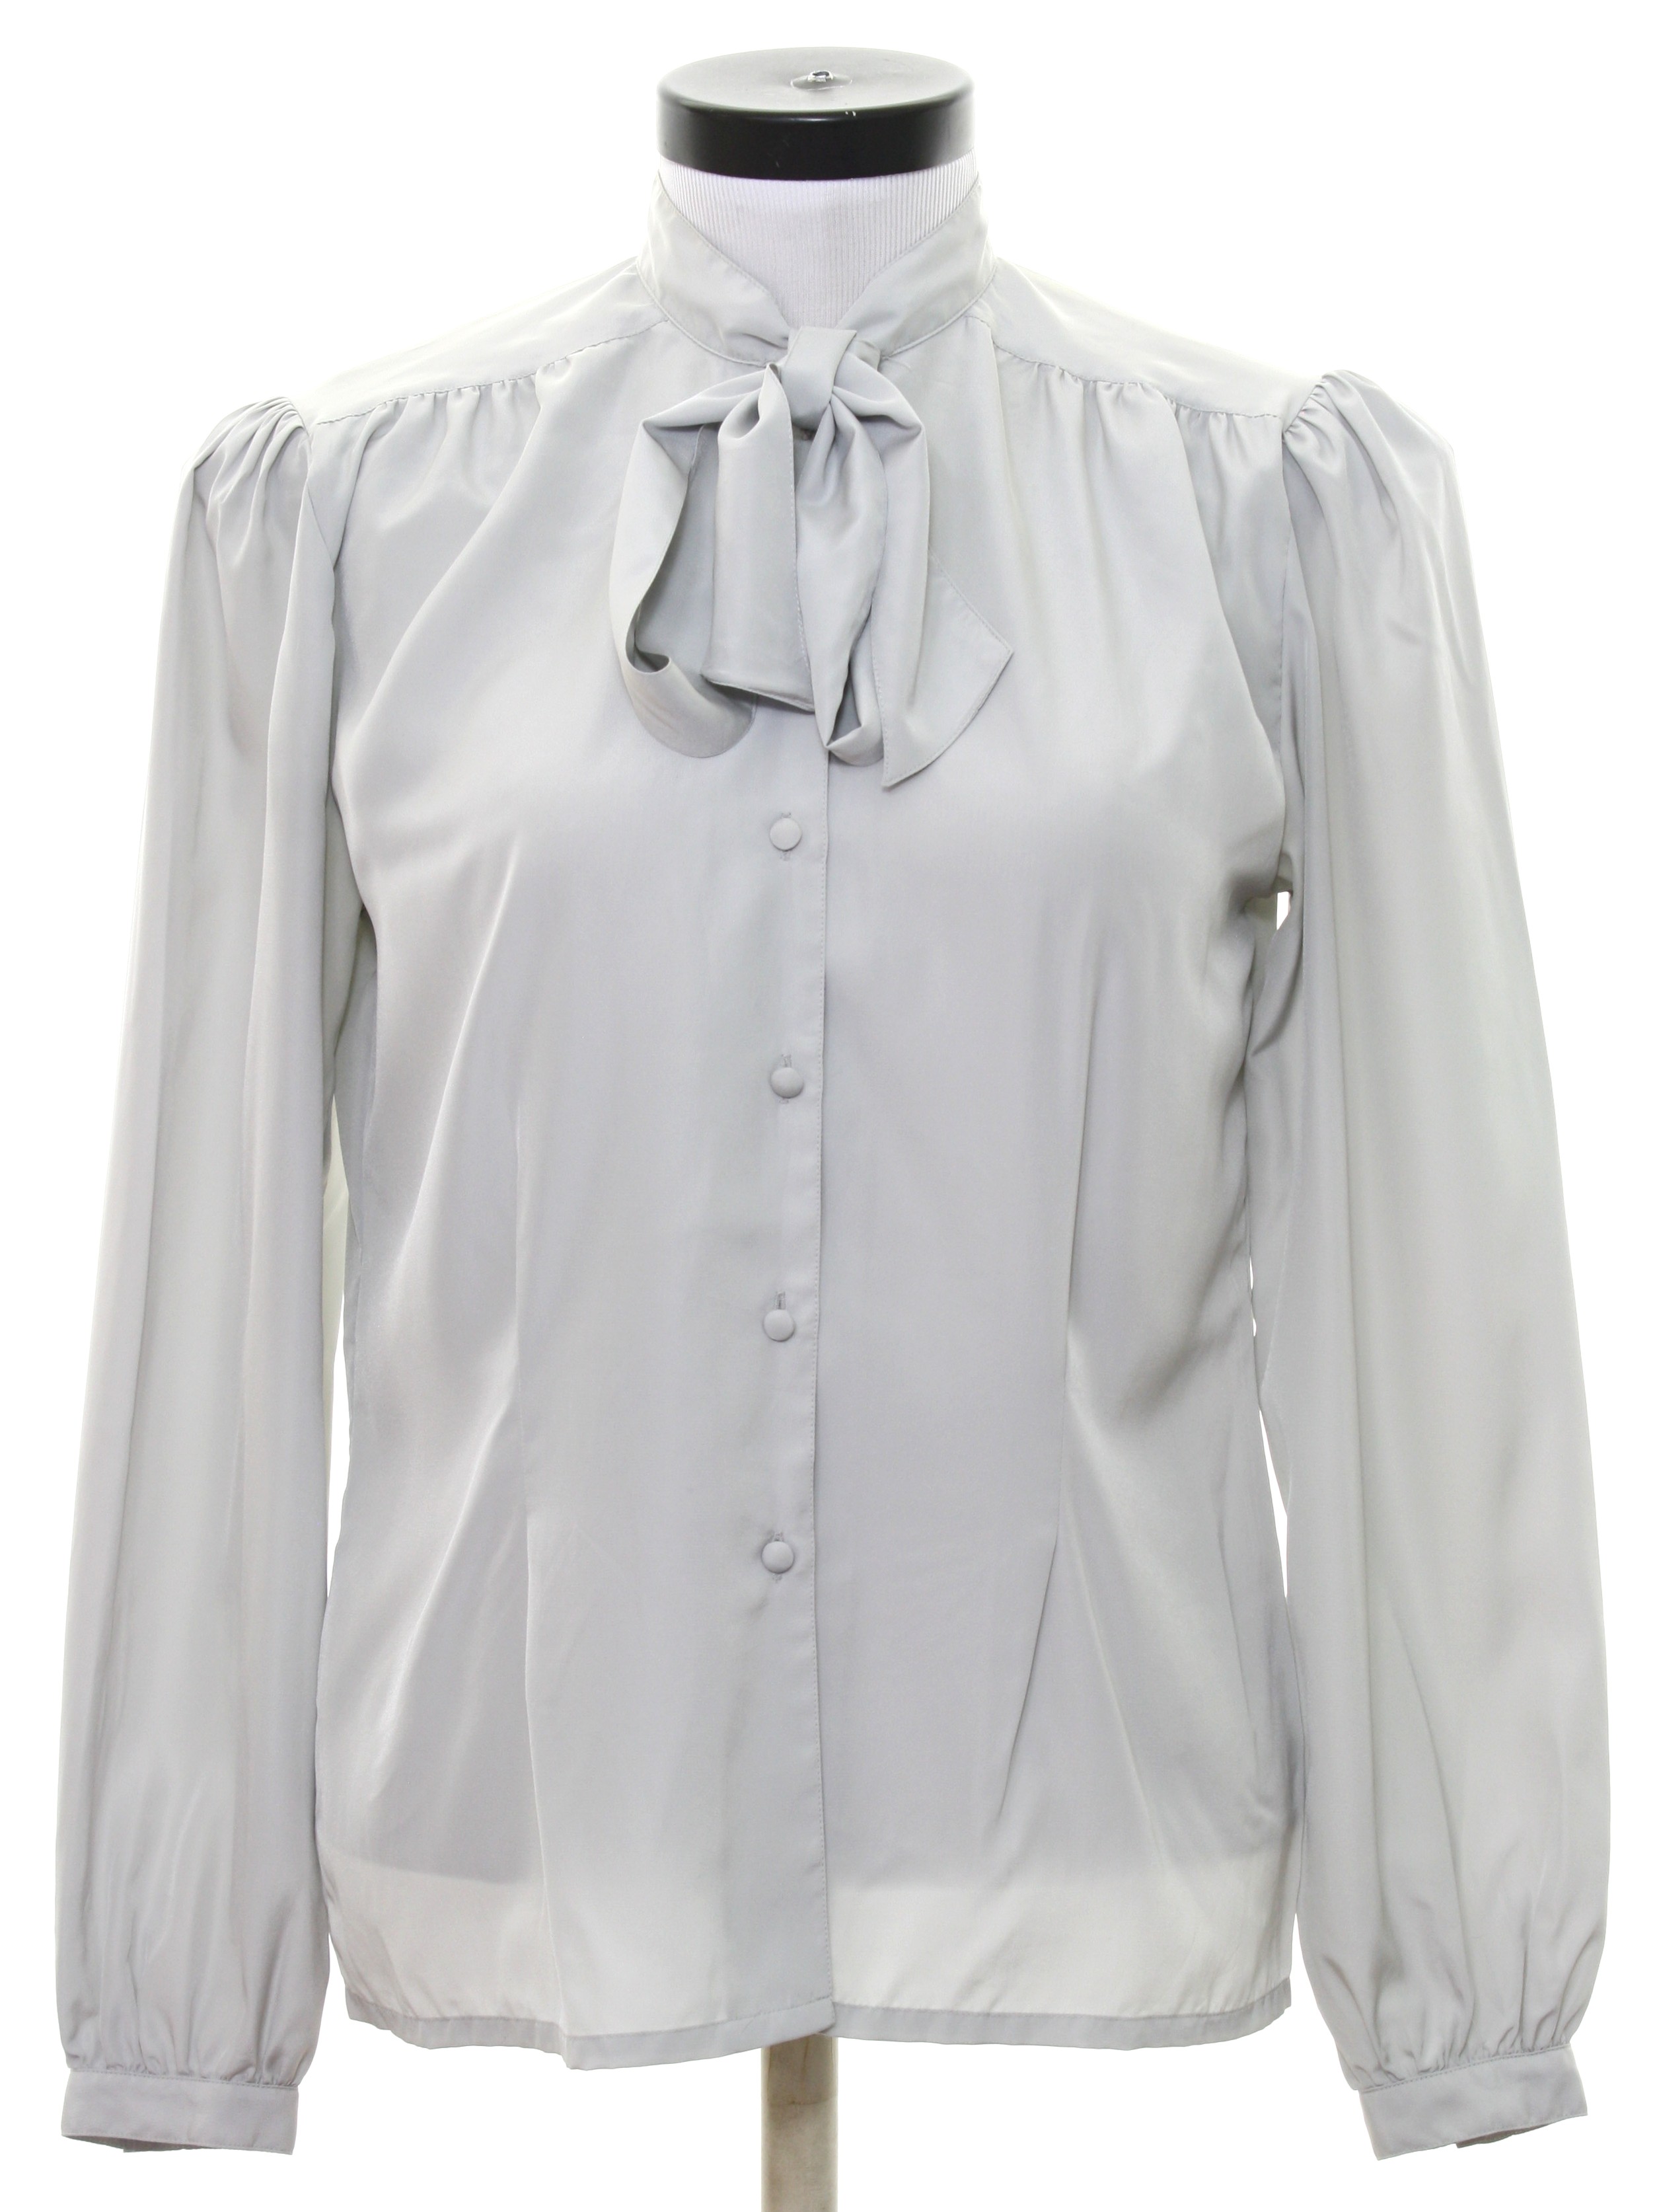 Retro 80s Shirt (Plumtree) : 80s -Plumtree- Womens light silver grey ...